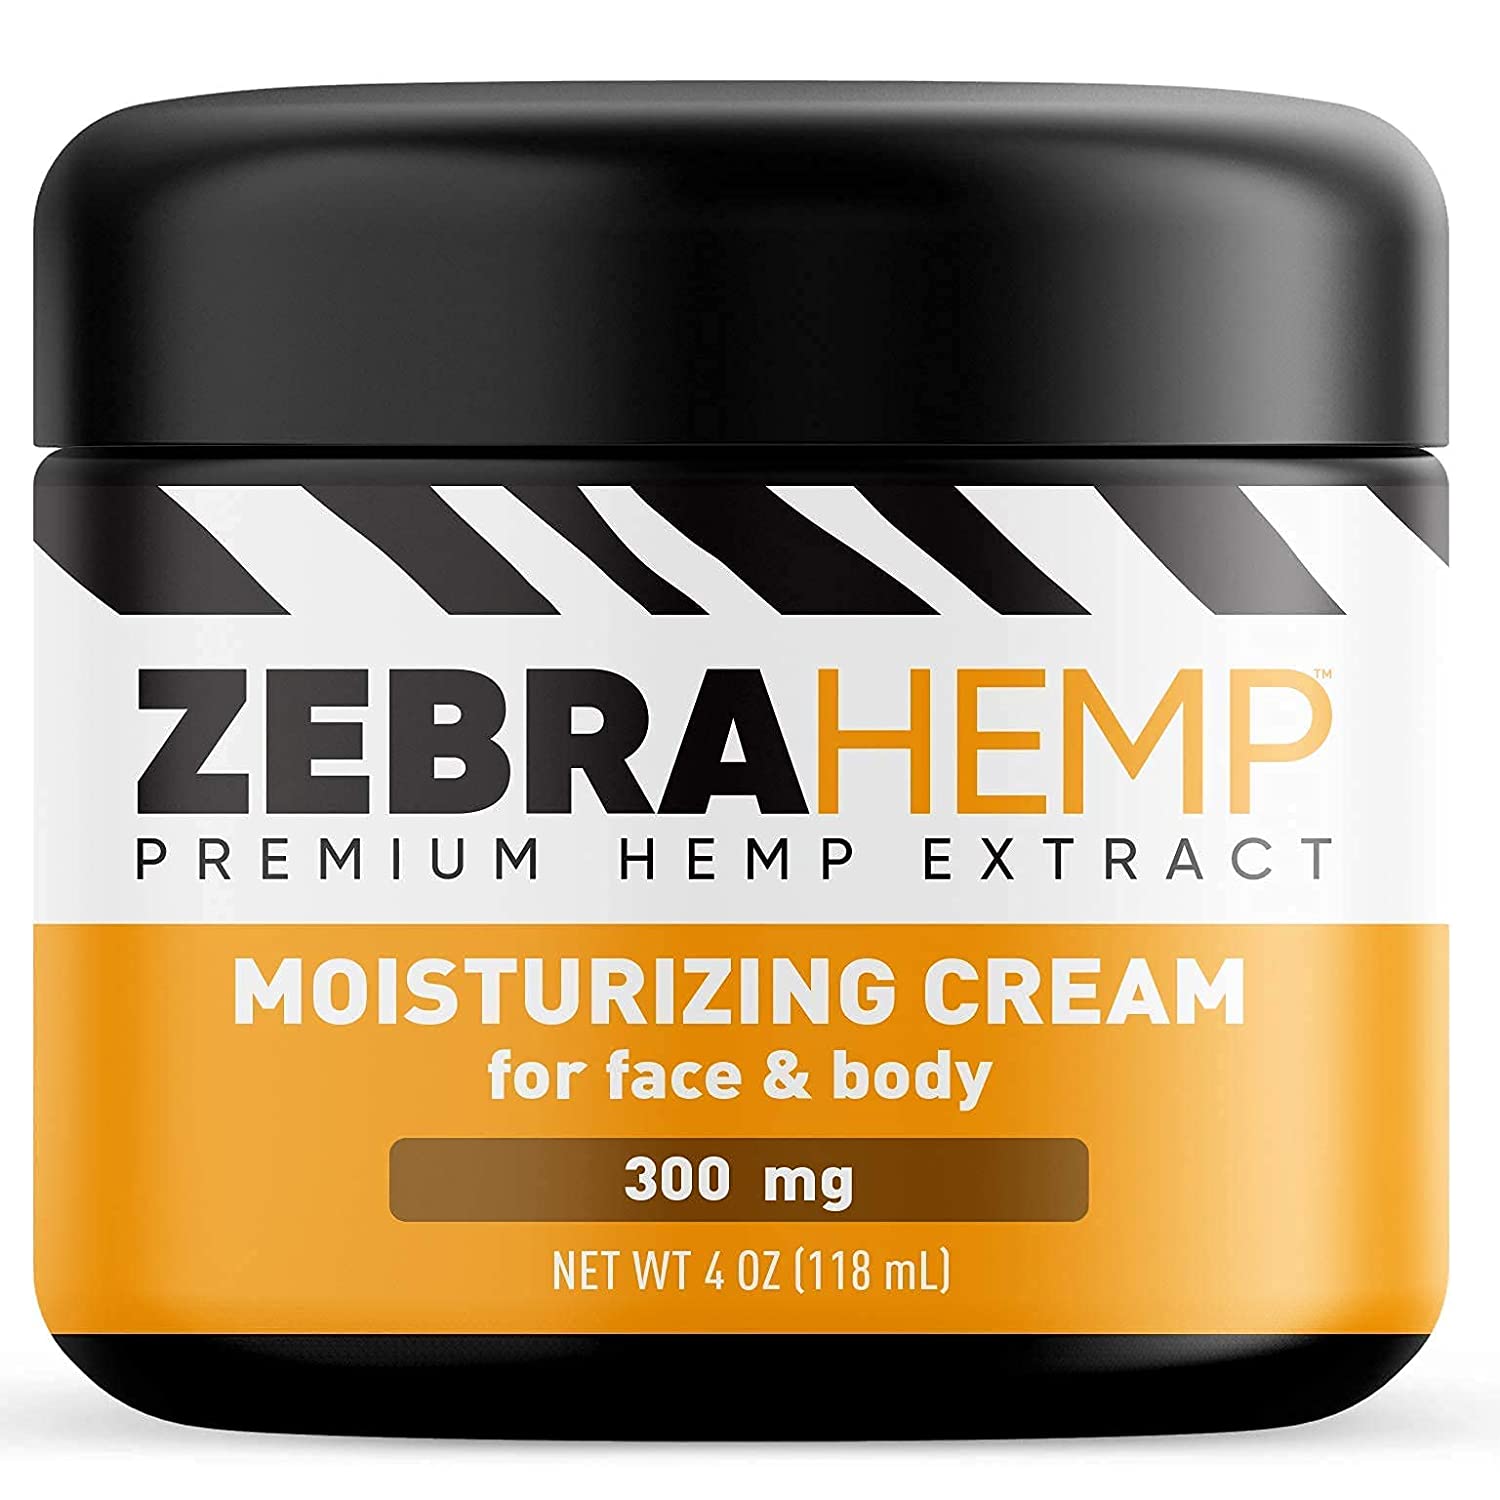 A jar of Zebra CBD hemp moisturizing cream